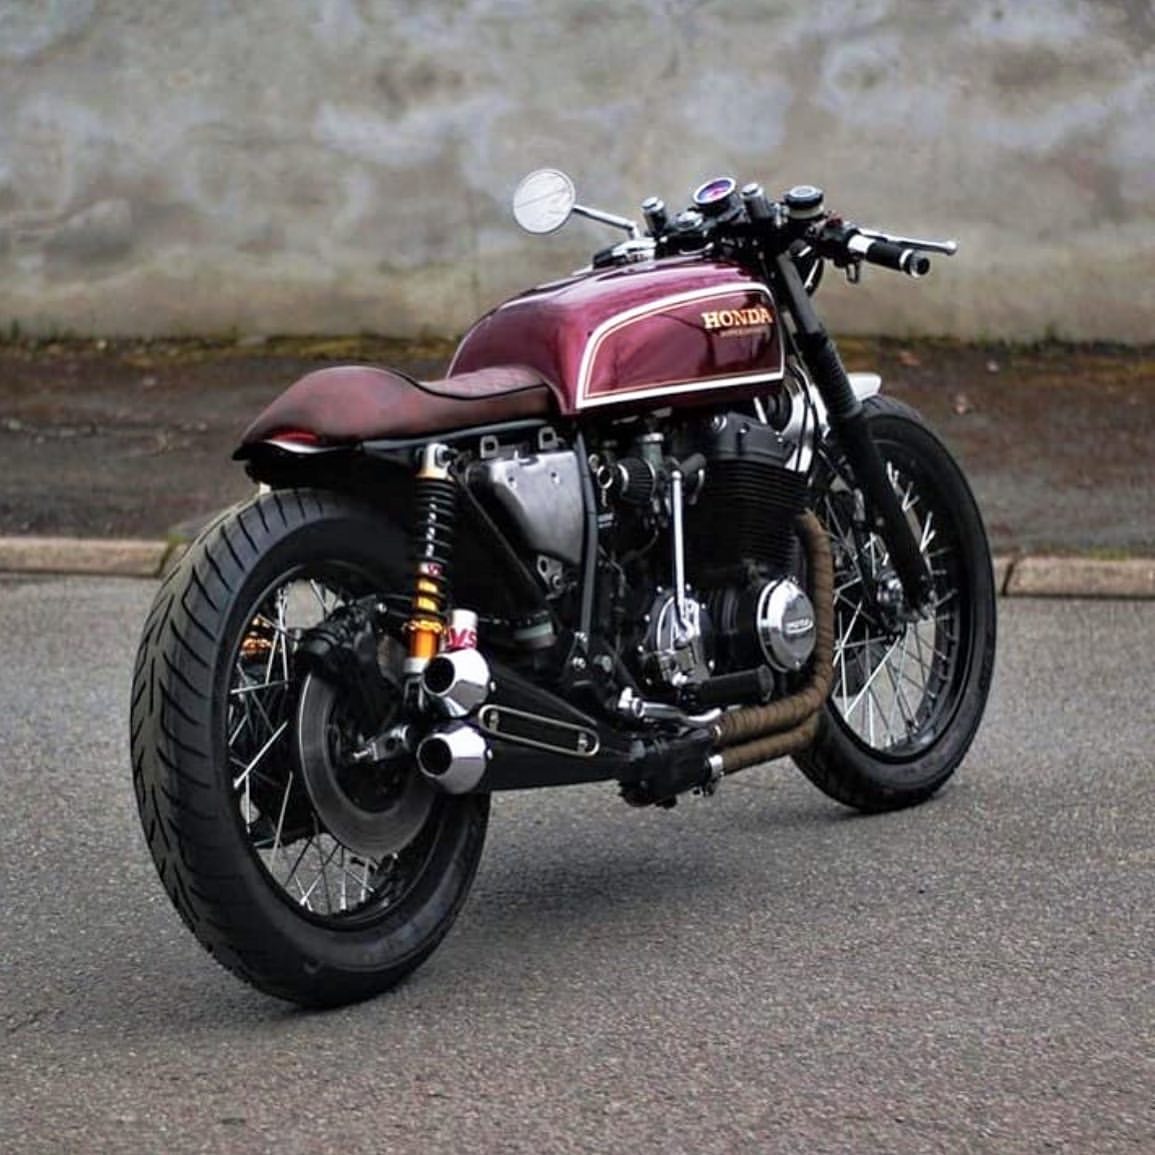 Modern Cafe Racer Custom Motorcycle Inspirations